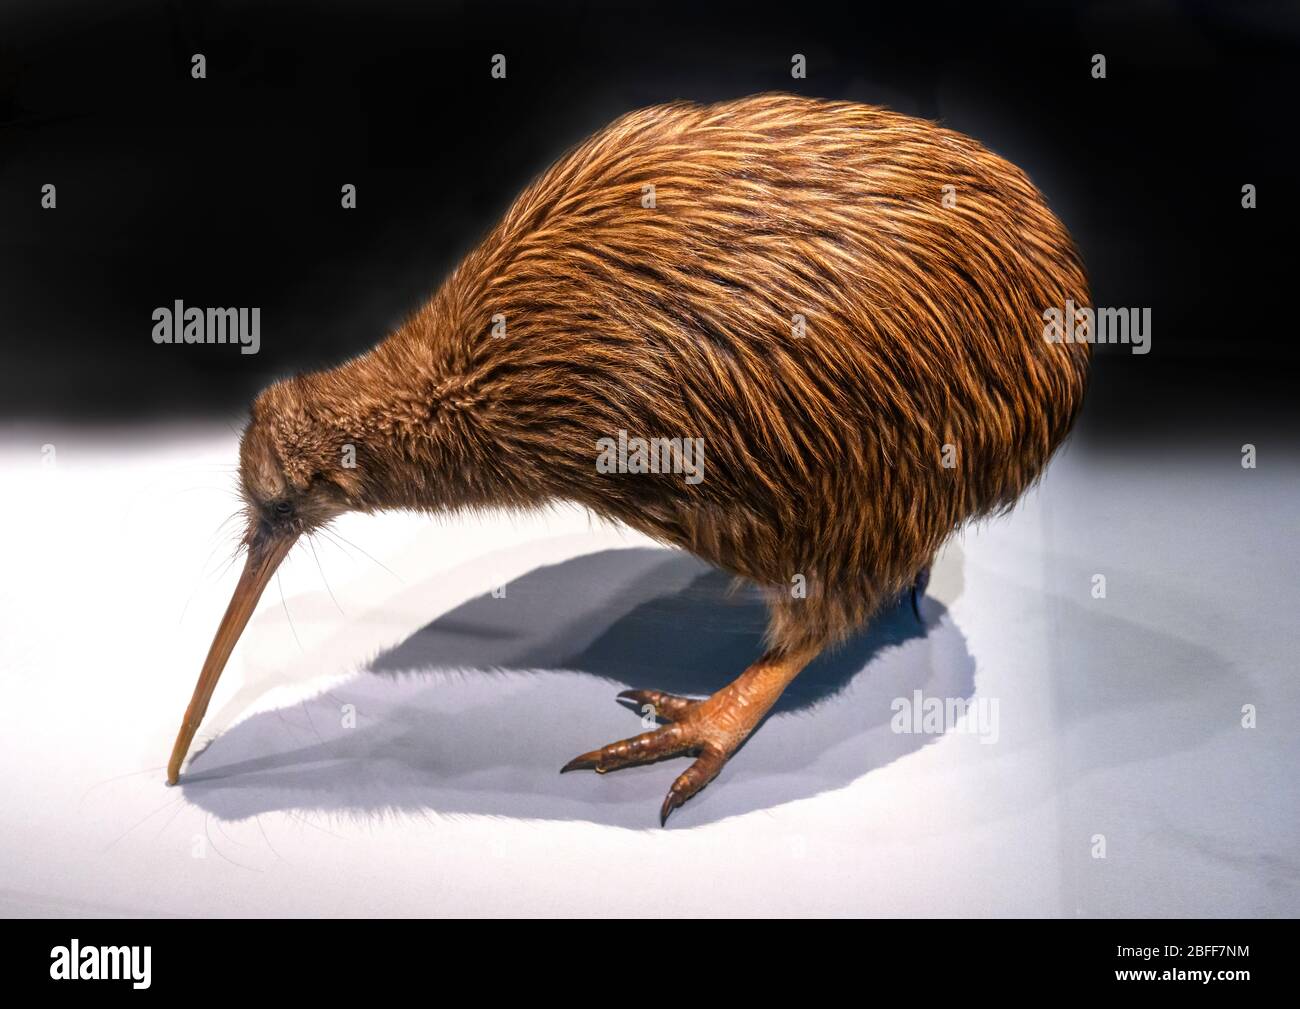 North Island Brown Kiwi (Apteryx mantelli), a flightless bird from New Zealand Stock Photo